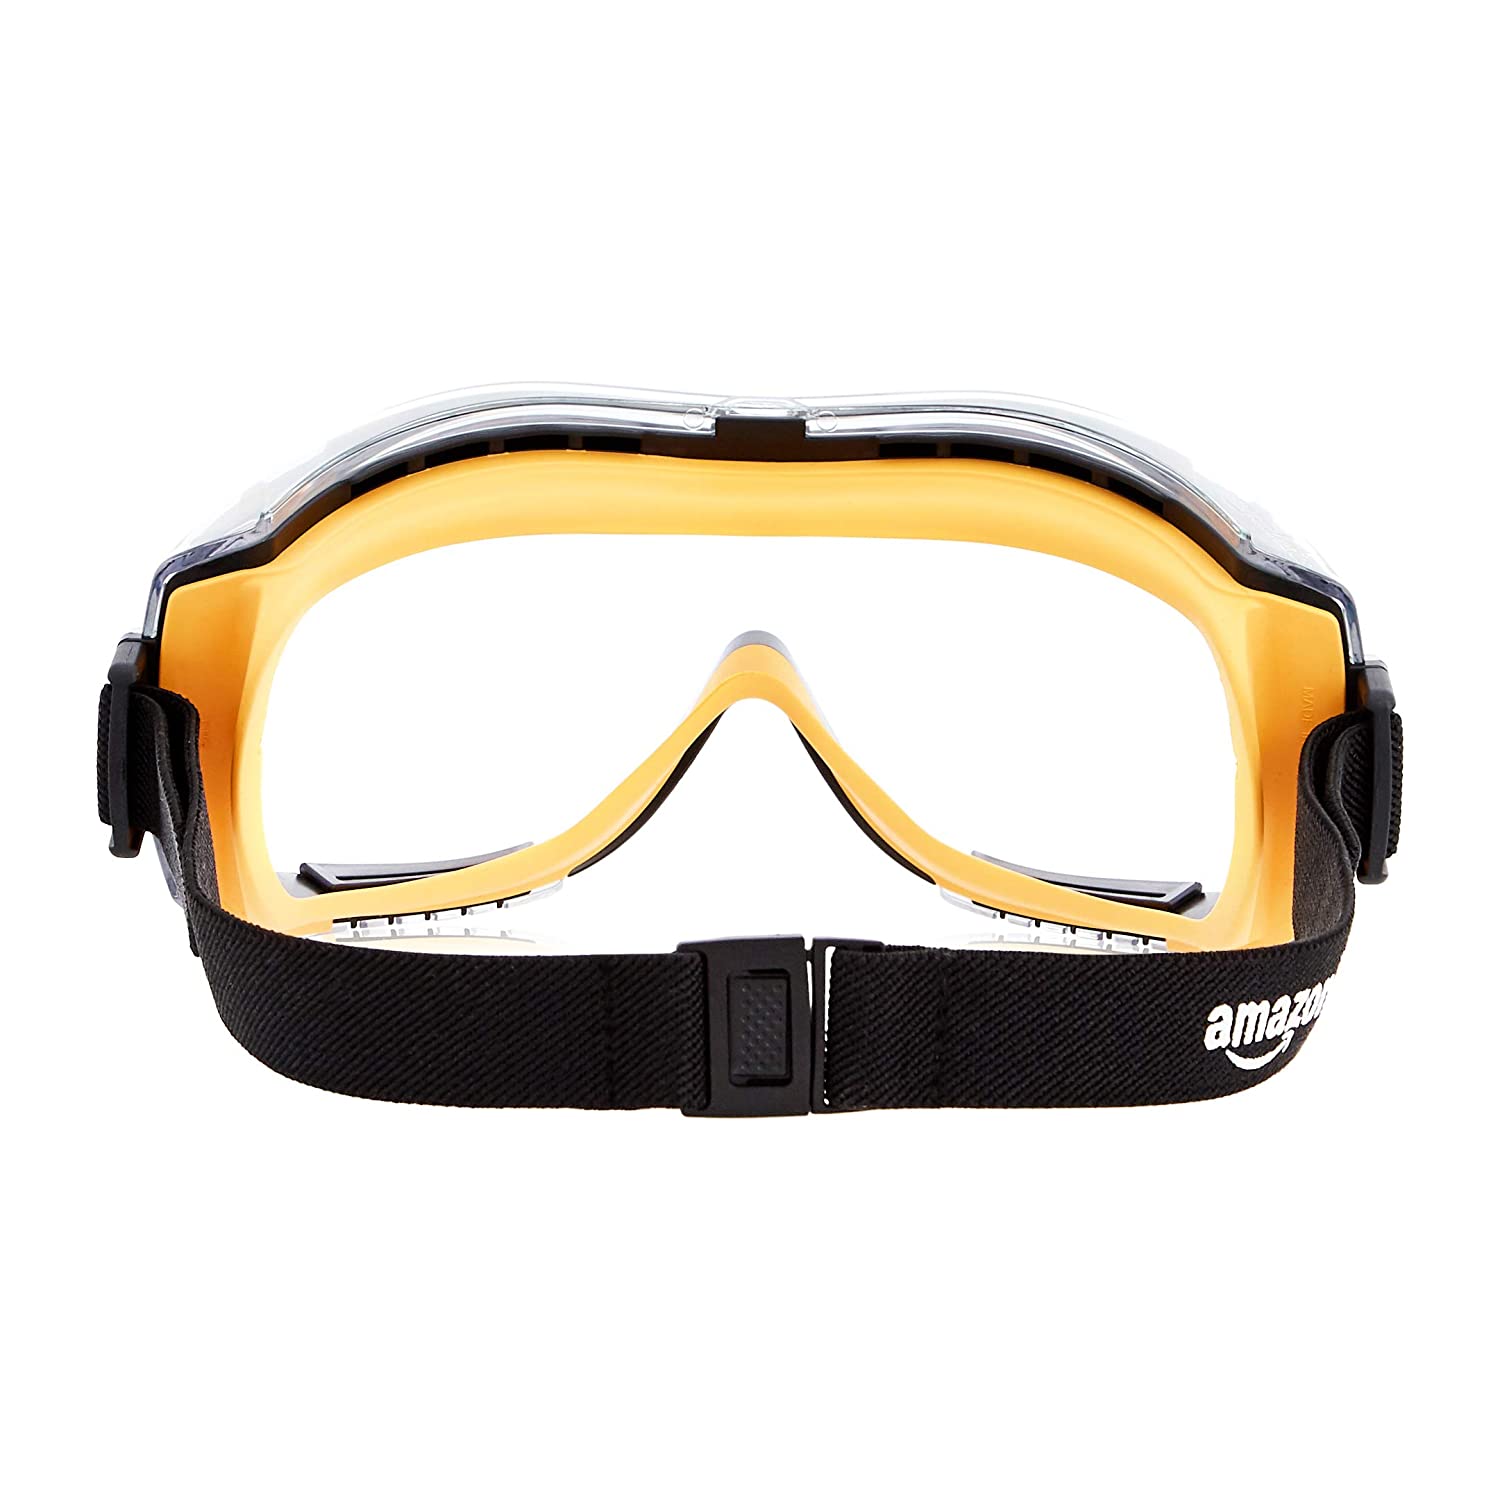 Amazon Basics Safety Goggle - Anti-Fog, Clear Lens and Elastic Headband, 2-Count